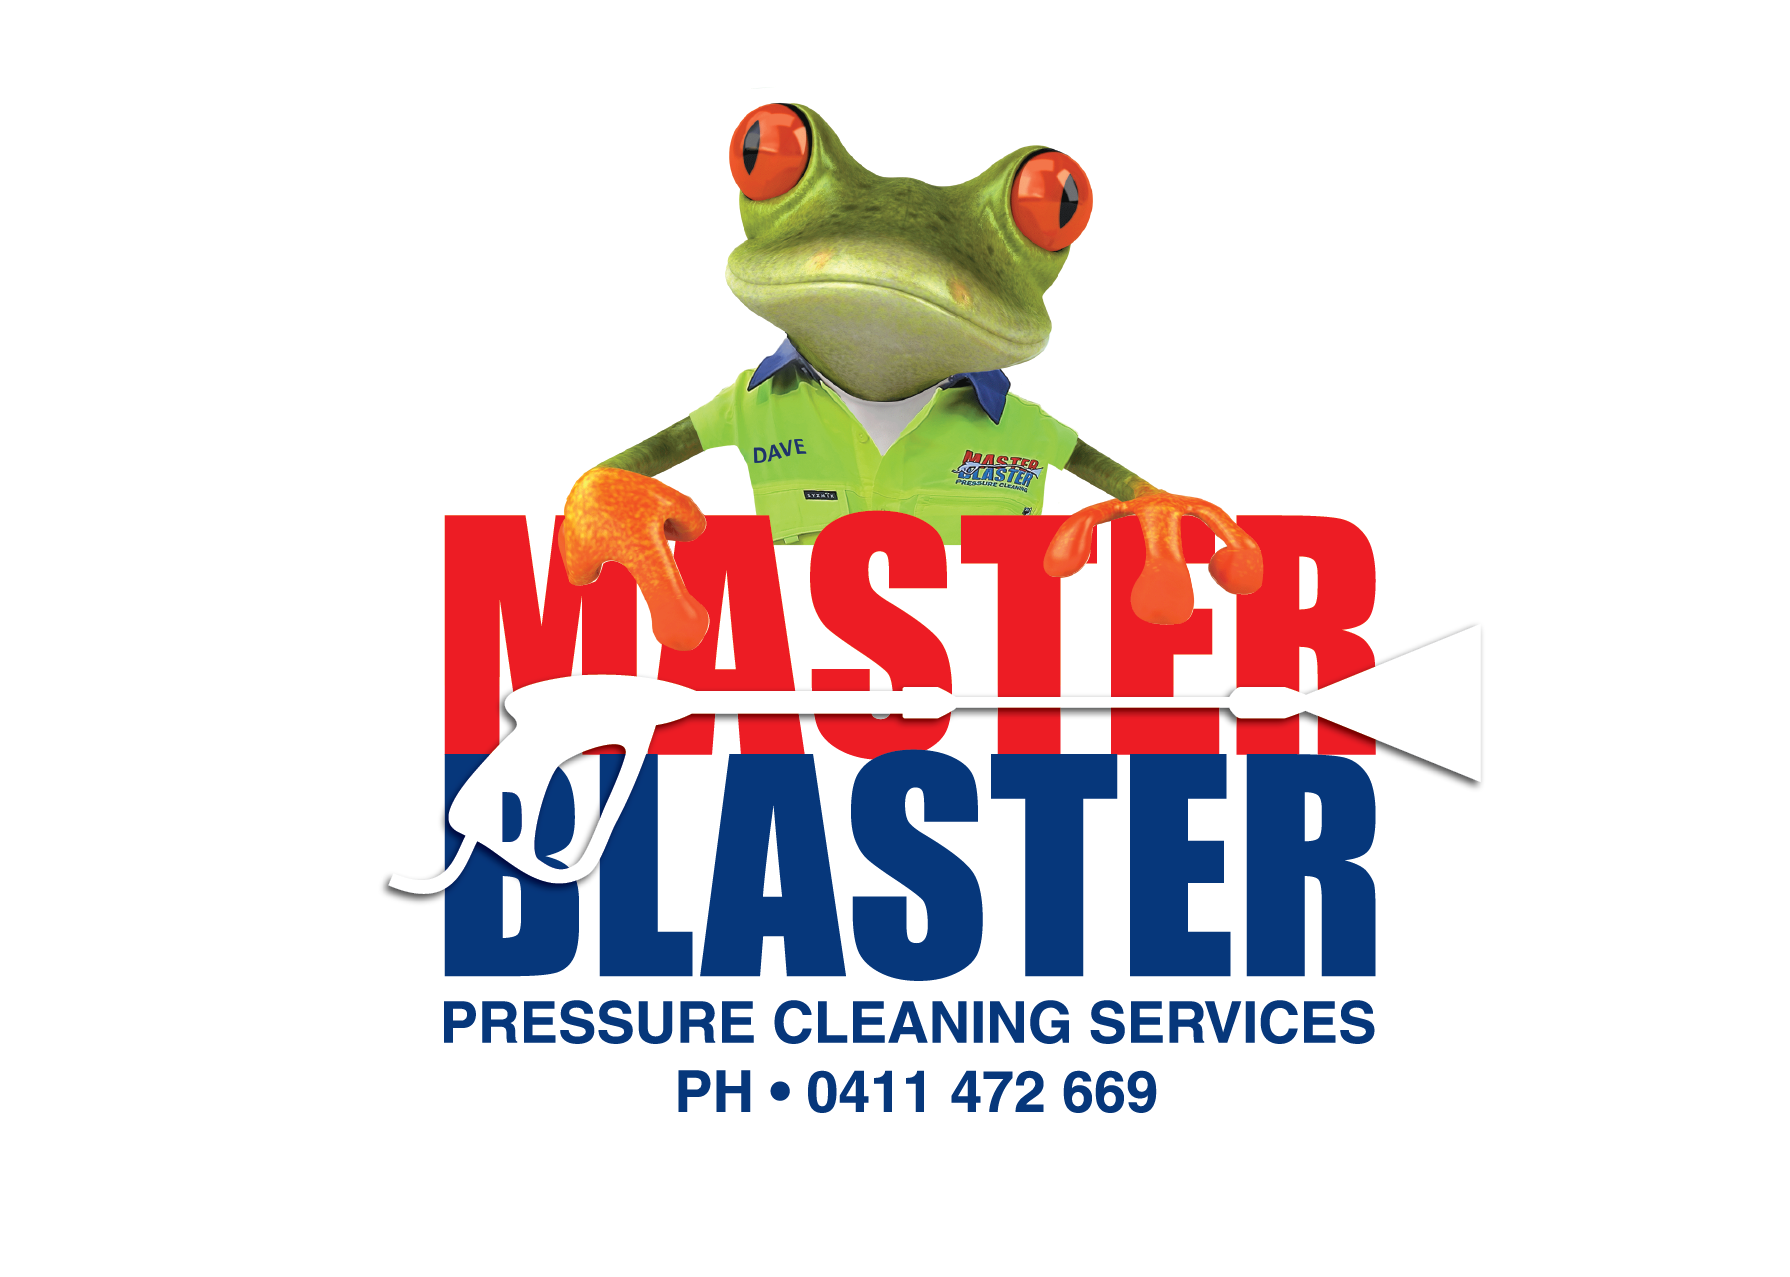 Master Blaster Pressure Cleaning